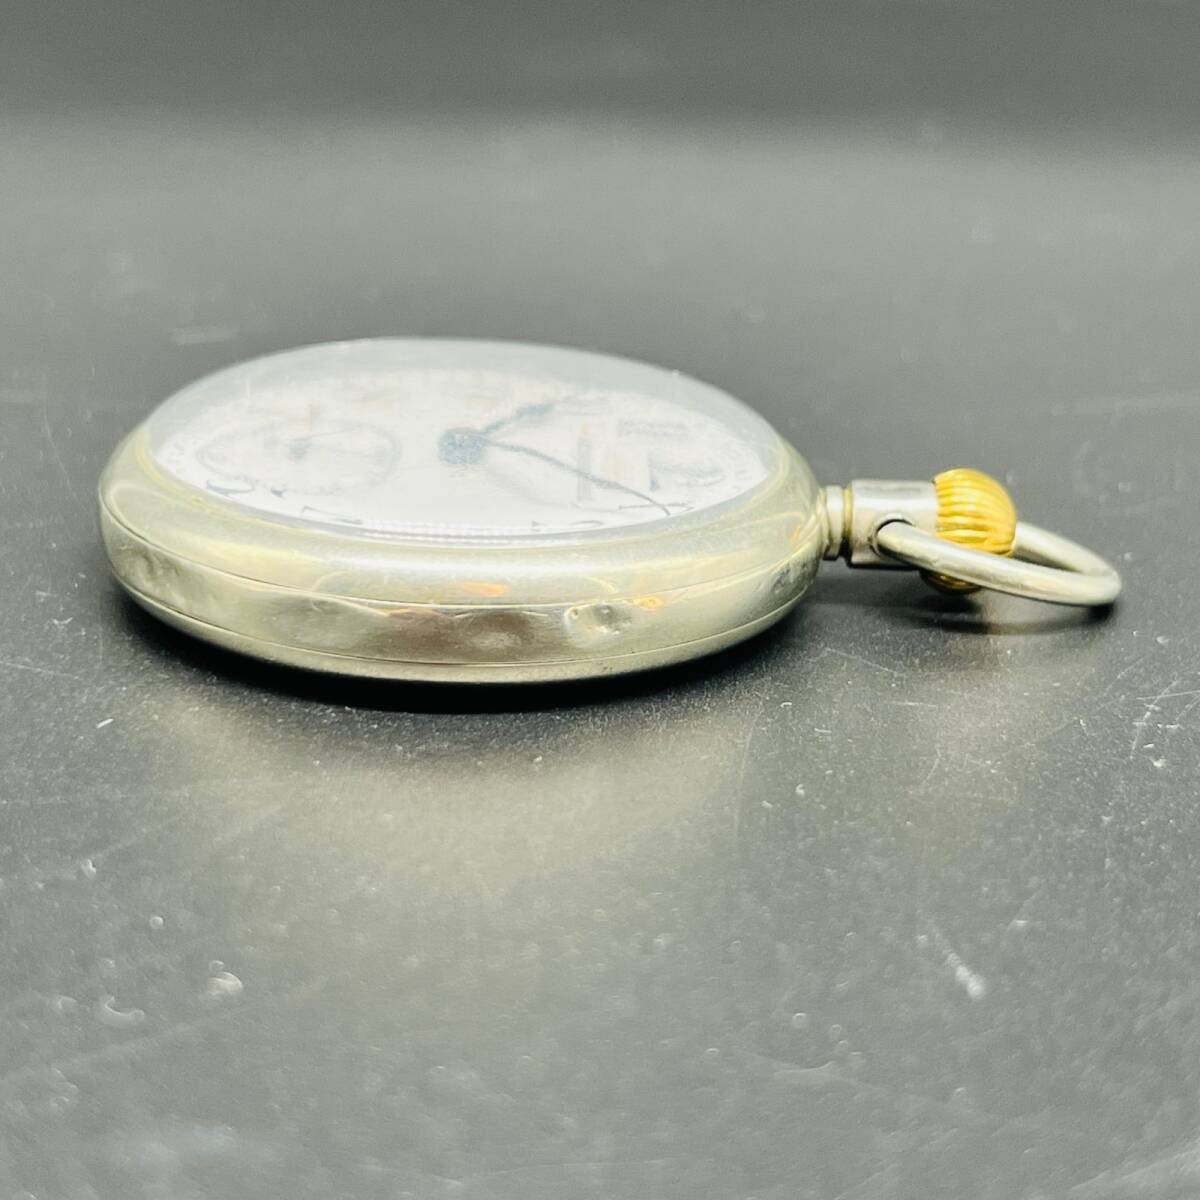 SEIKOSHA 精工舎 懐中時計 手巻き 大鐵刻印 4294 稼働品 セイコーシャ レトロ アンティーク 時計 コレクション コレクター ホワイト 8048 の画像5